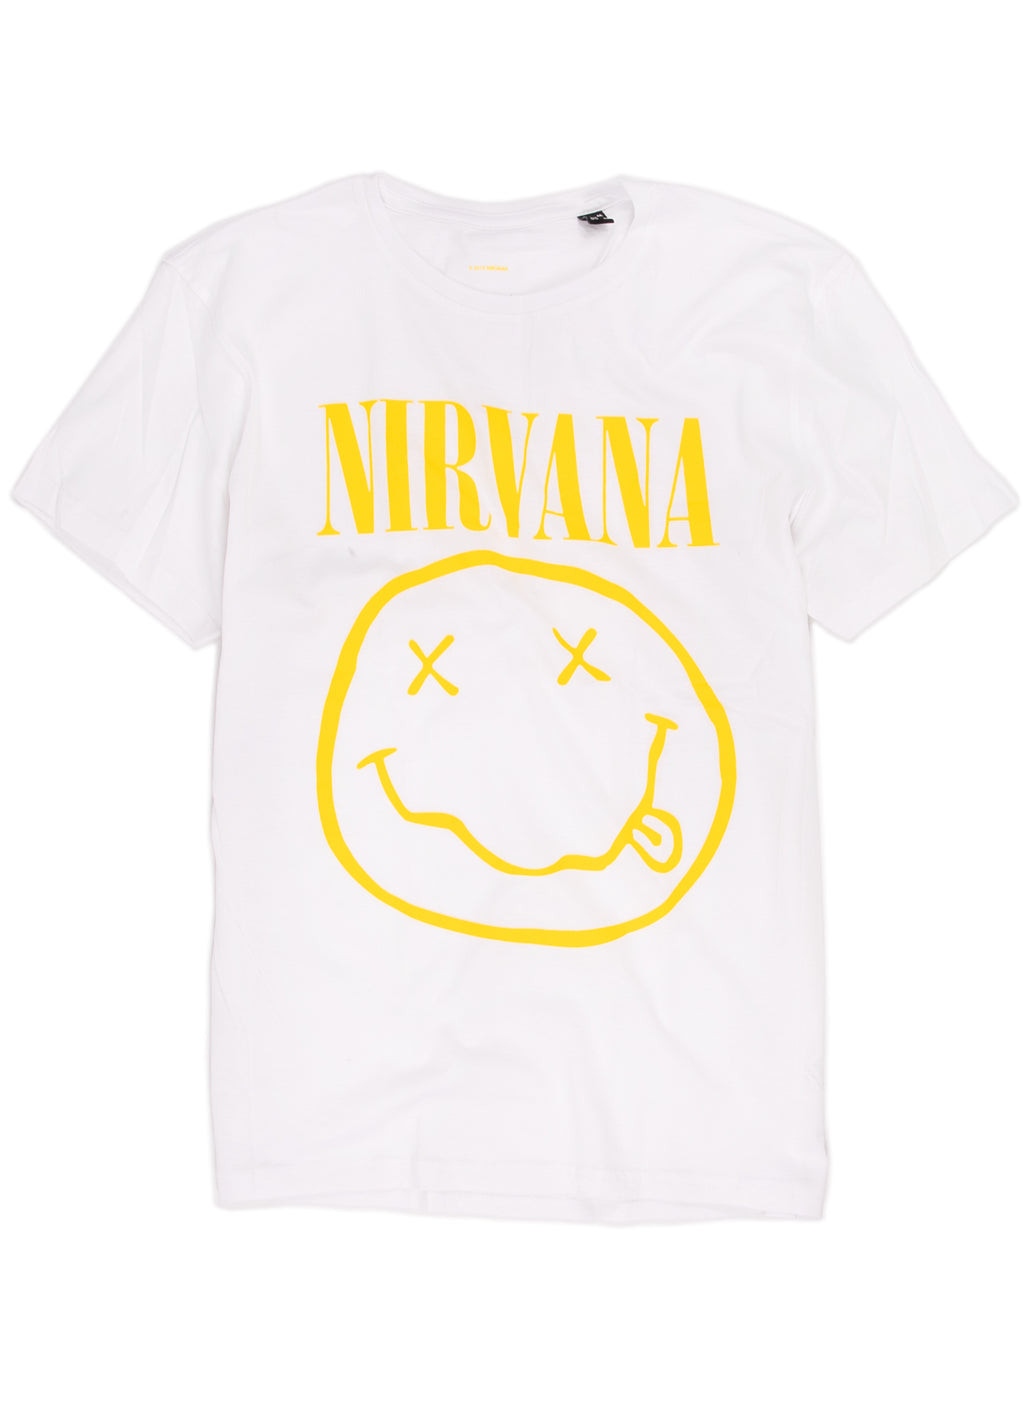 Nirvana smile t-shirt.